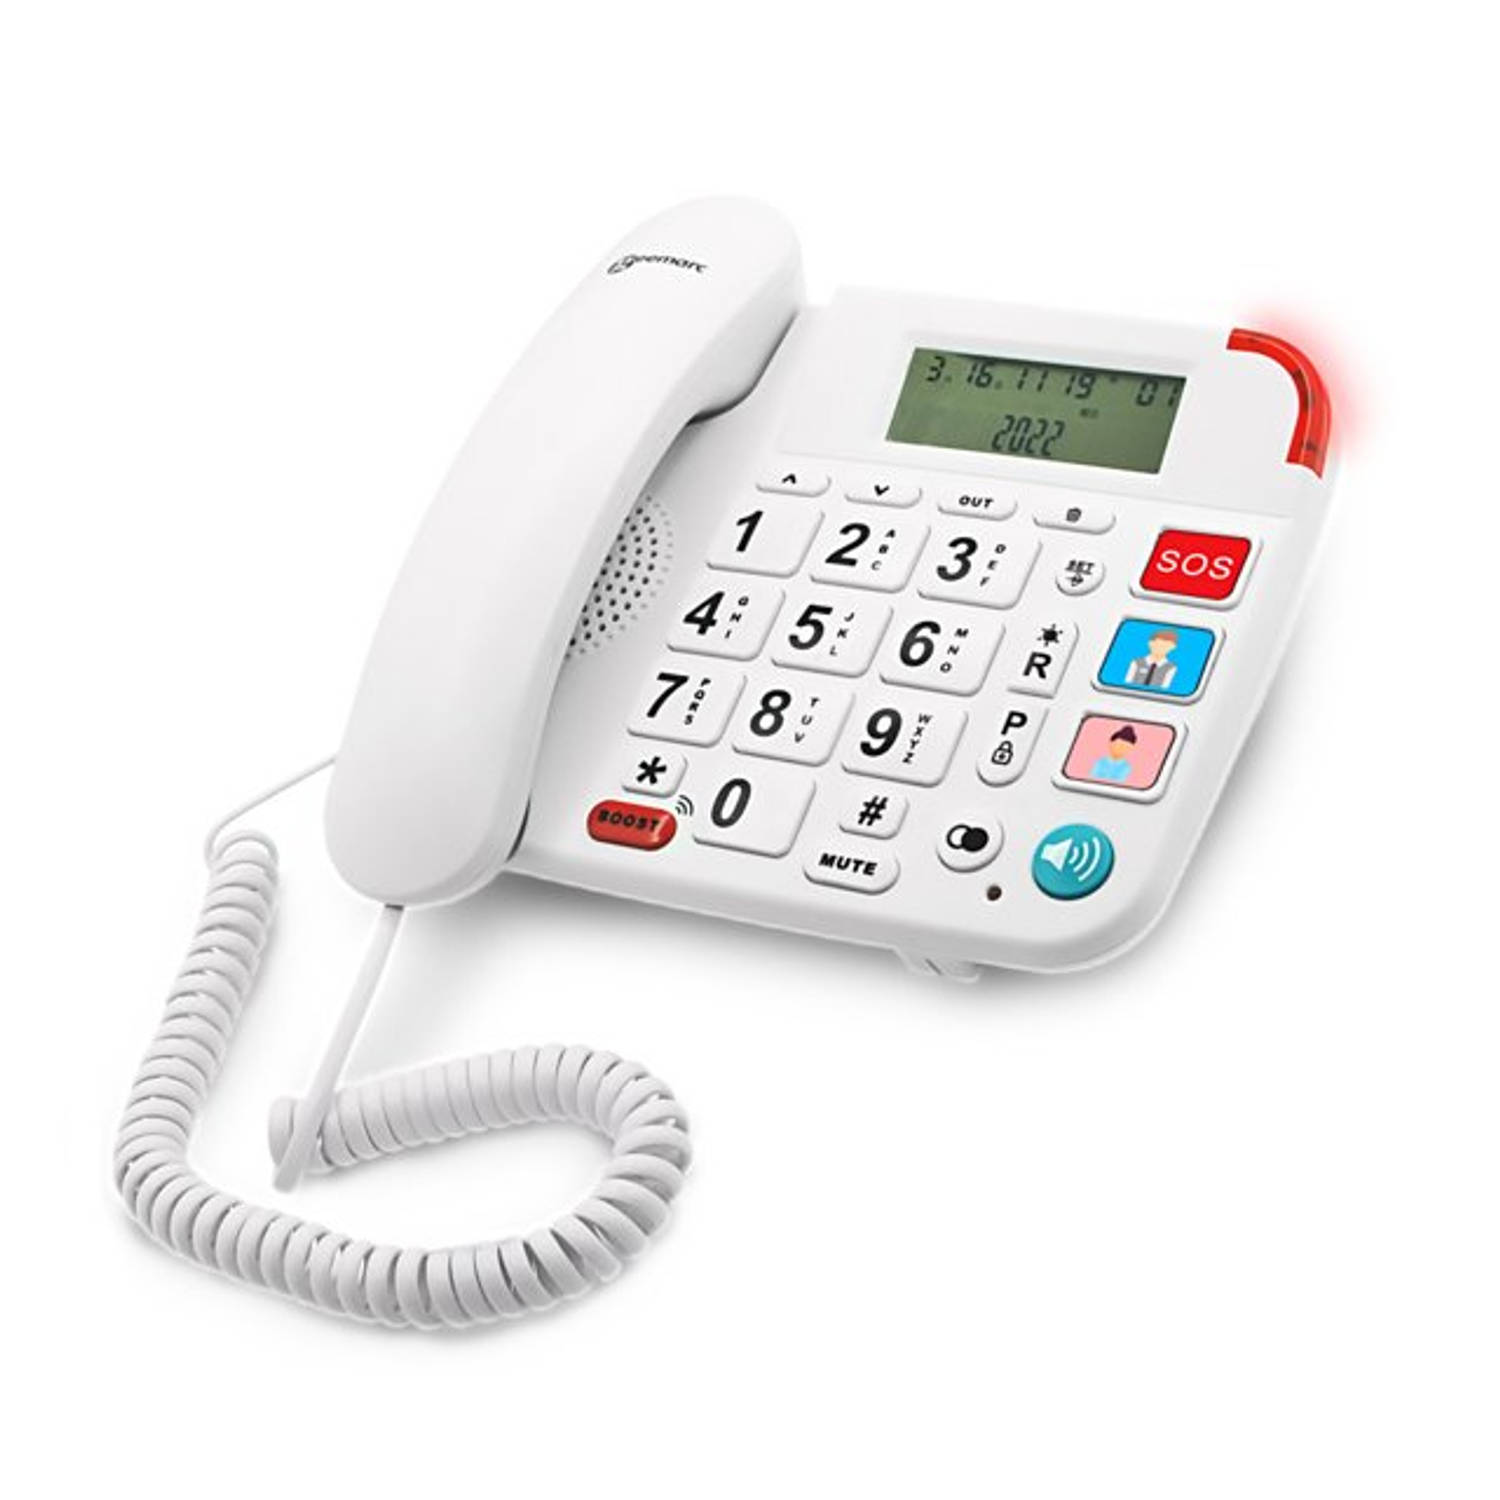 Geemarc Dallas 20 - Vaste telefoon met grote toetsen voor senioren